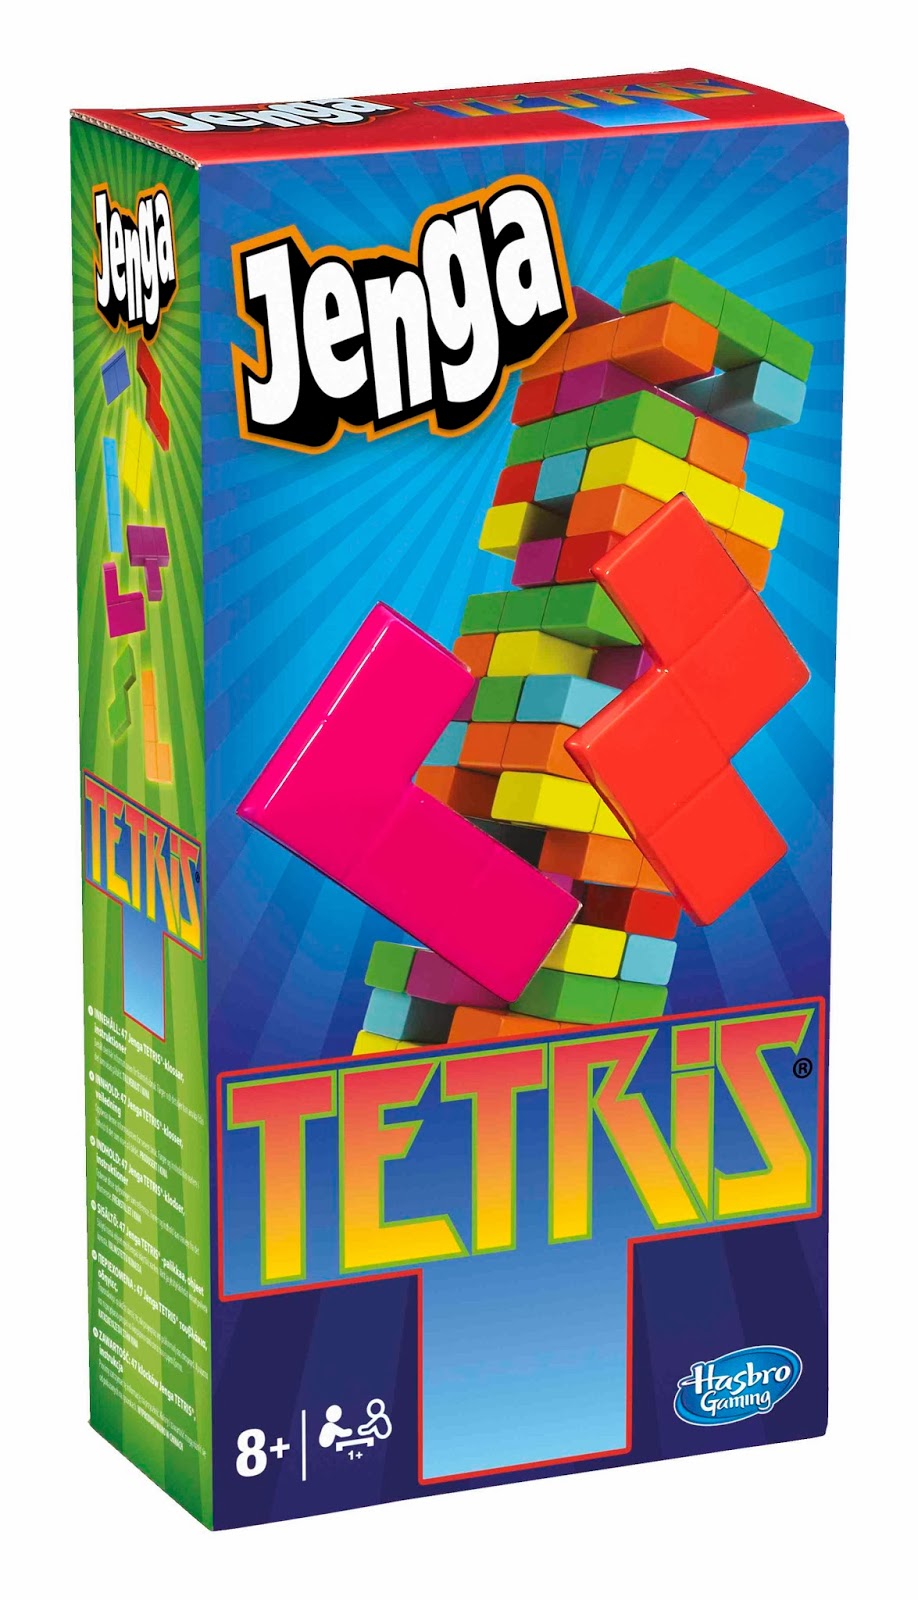 Susan's Disney Family: Hasbro Jenga Tetris, a color fun family game #